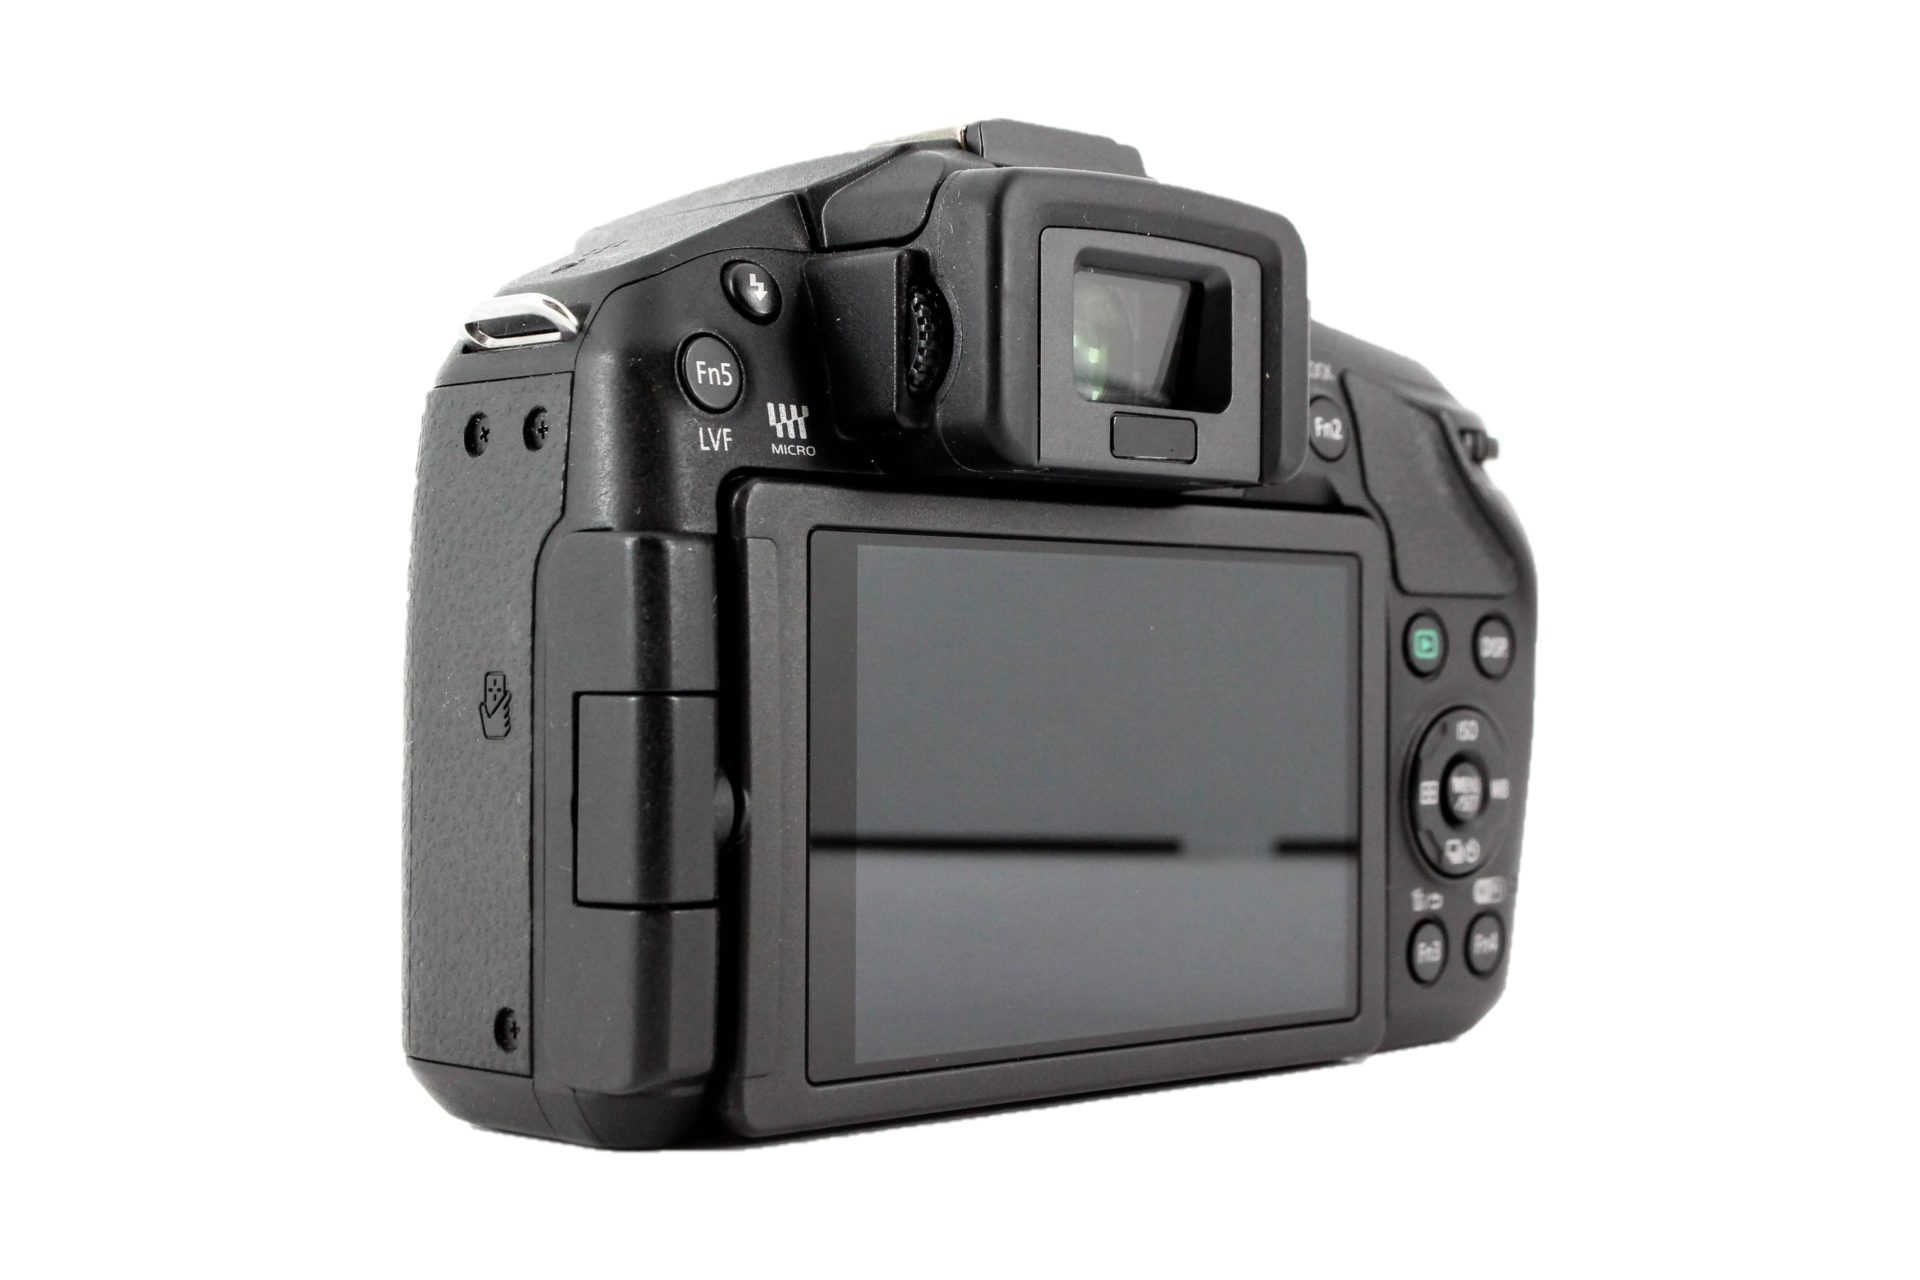 Panasonic LUMIX DMC-G5 16.0MP Digital Camera